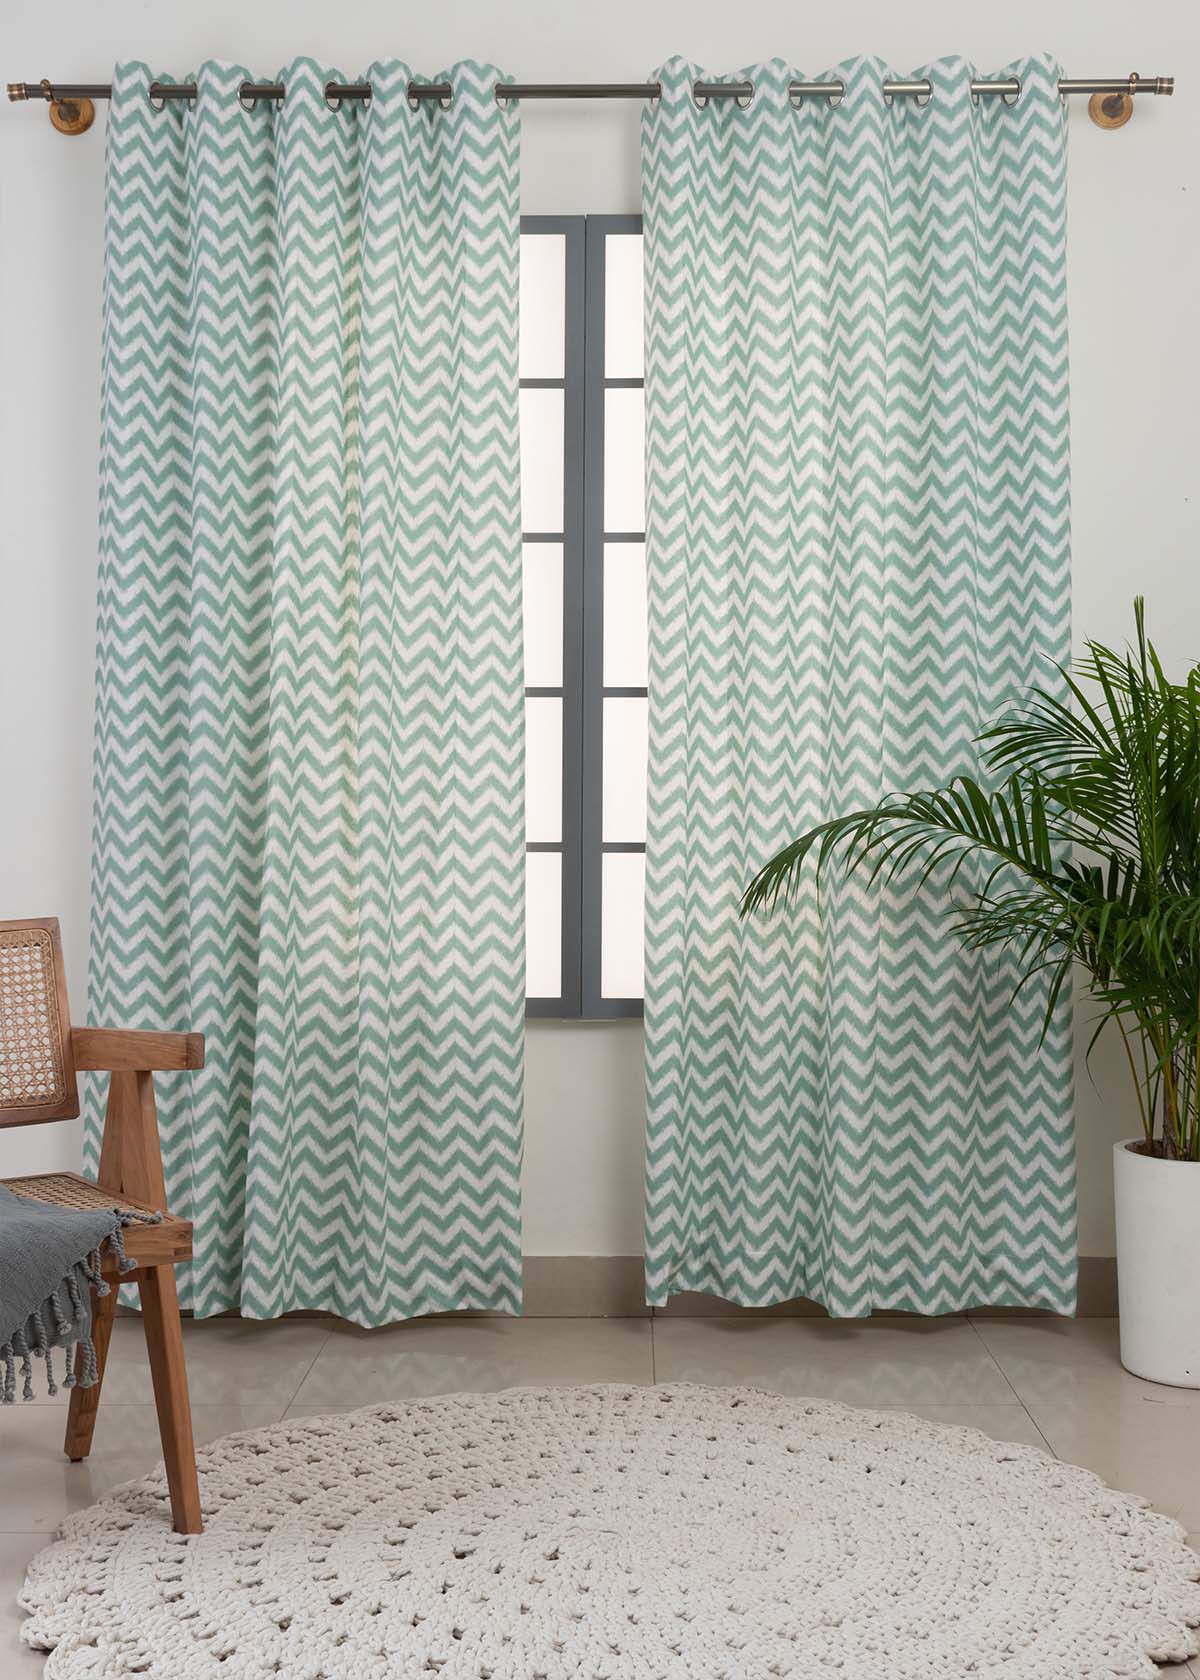 Ikat Chevron 100% cotton geometric curtain for living room - Room darkening - Nile Blue - Pack of 1